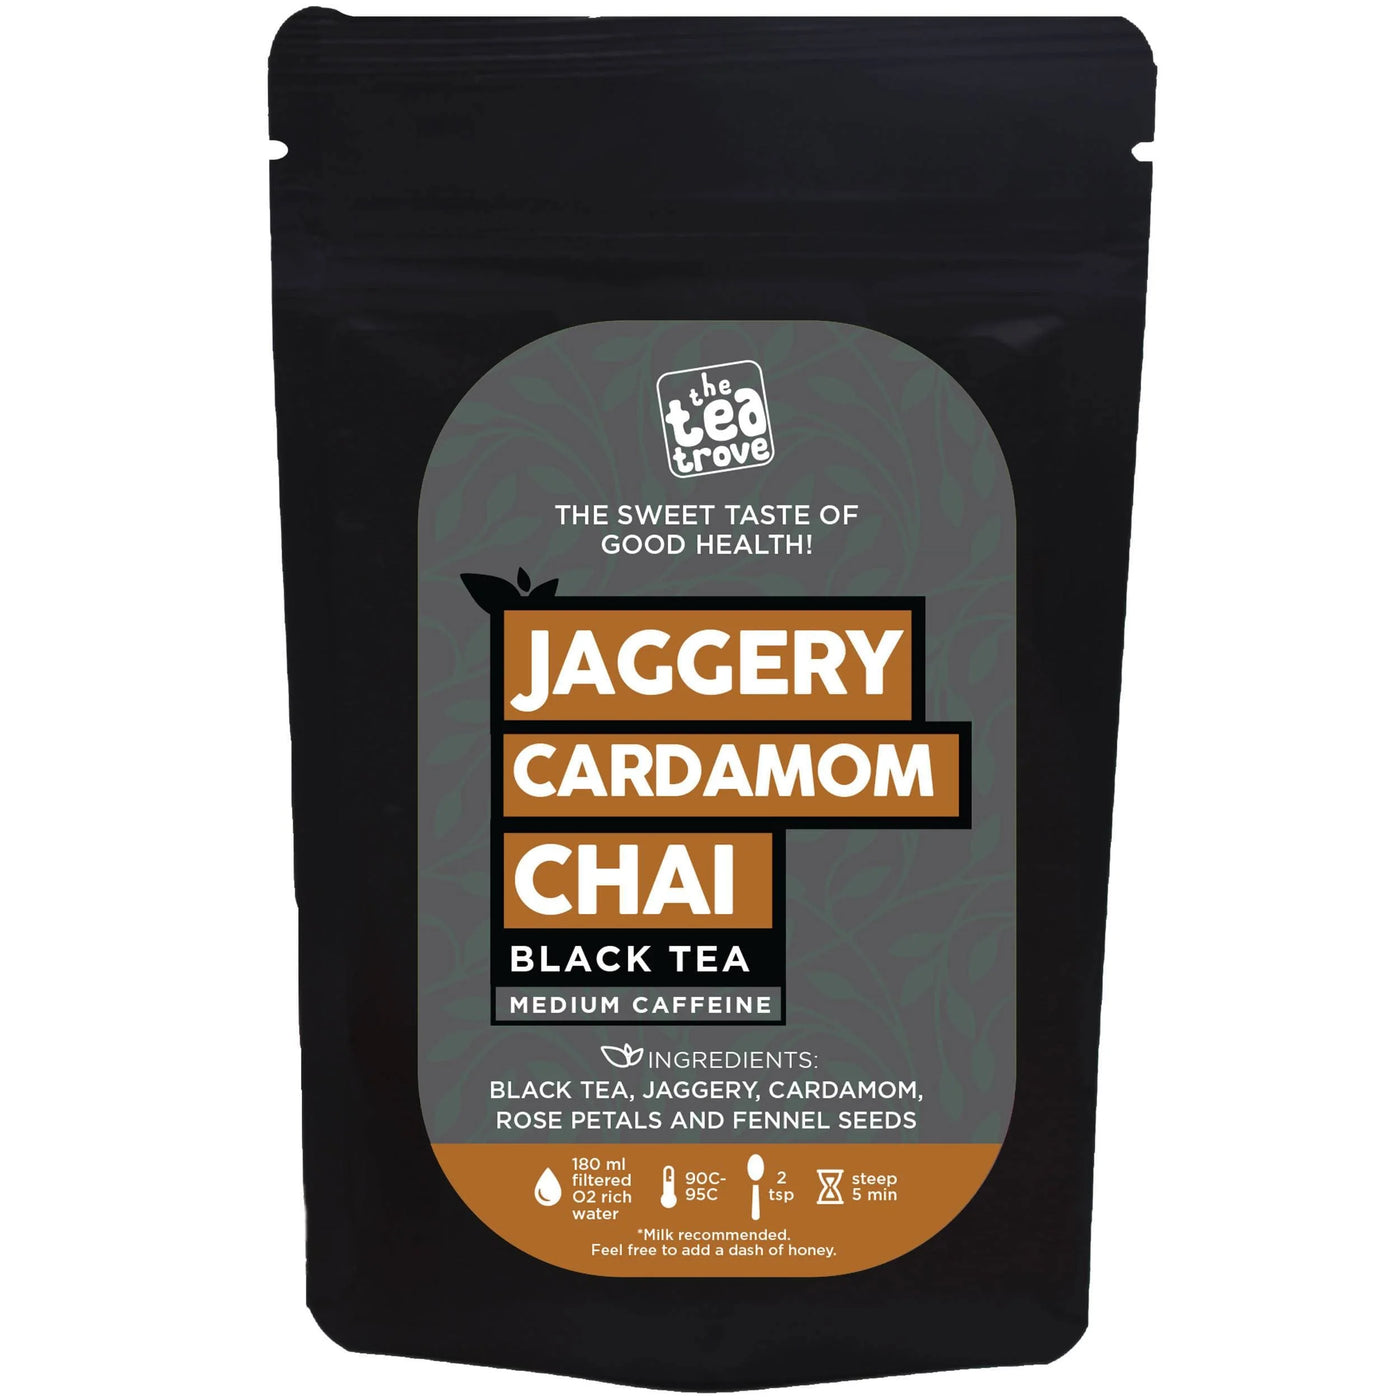 The Tea Trove - Jaggery Cardamom Chai Black Tea